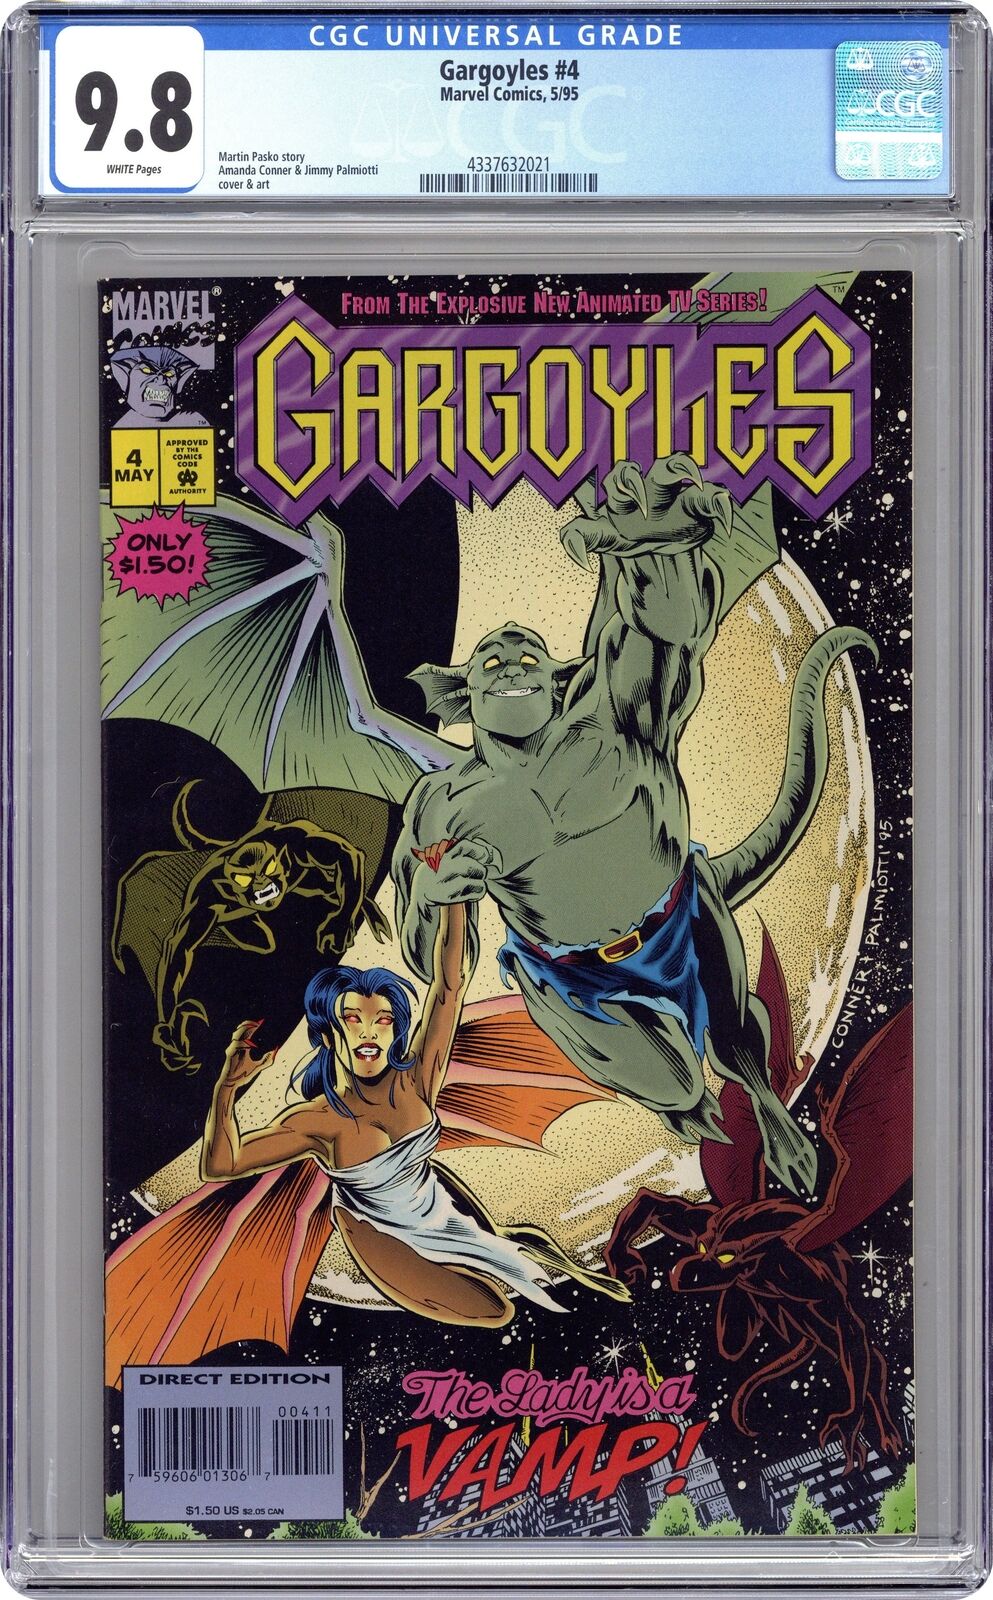 Gargoyles #4 CGC 9.8 1995 4337632021